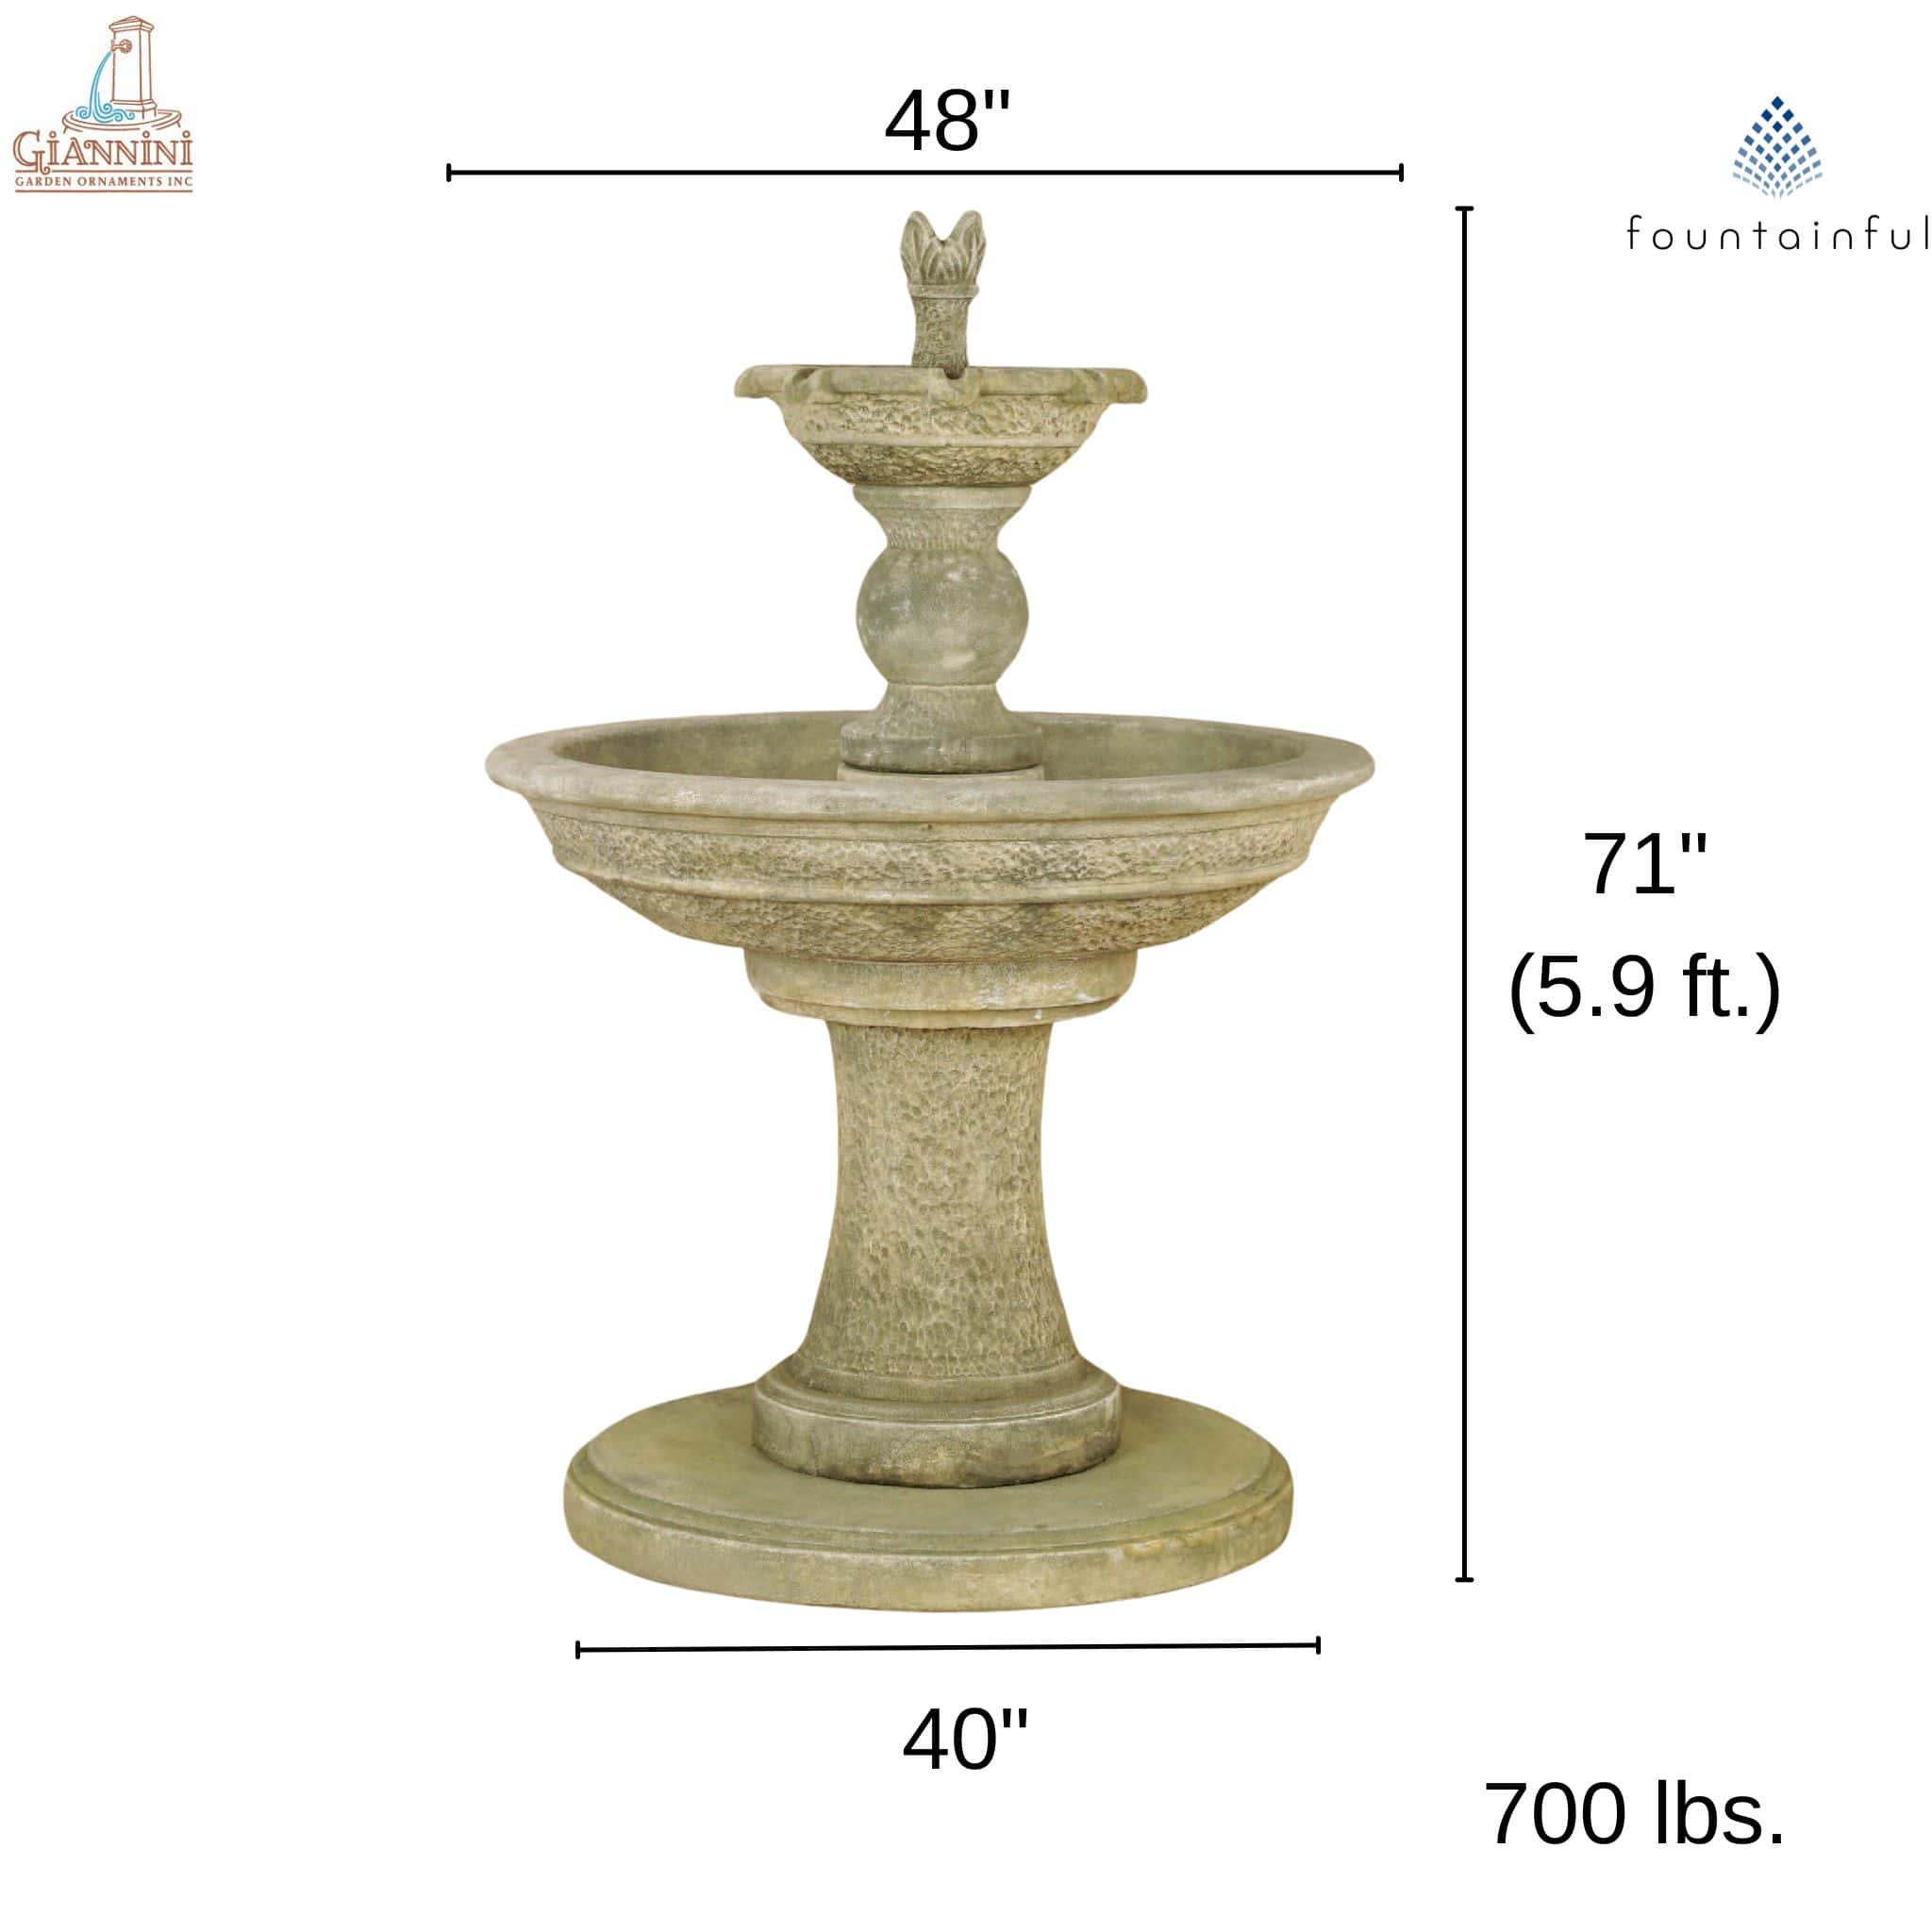 Antiquarium 2-Tier Concrete Fountain with Base - Giannini #1133